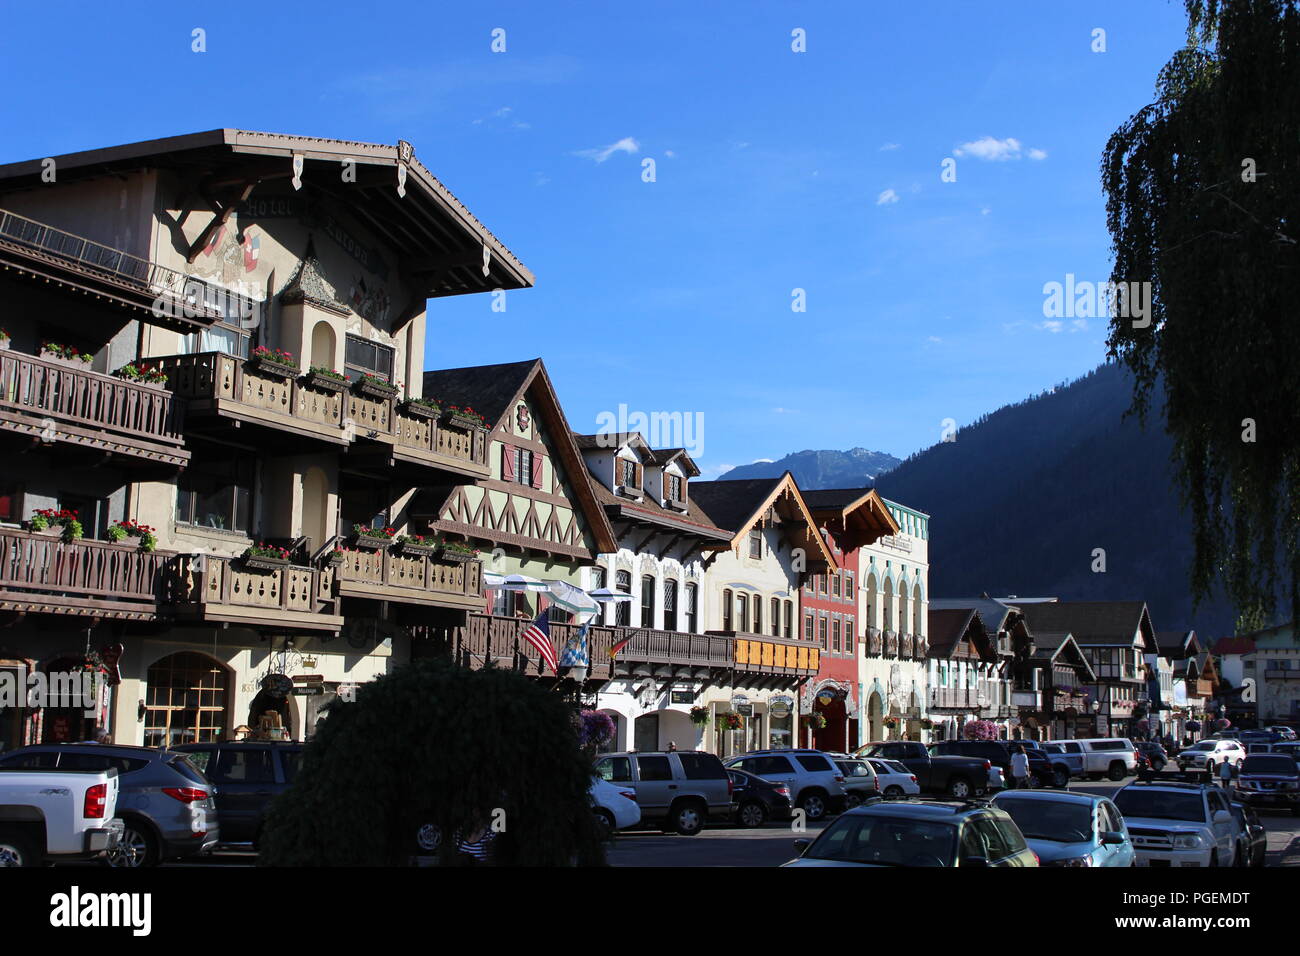 Bavarian themed town of Leavenworth, Washington Stock Photo